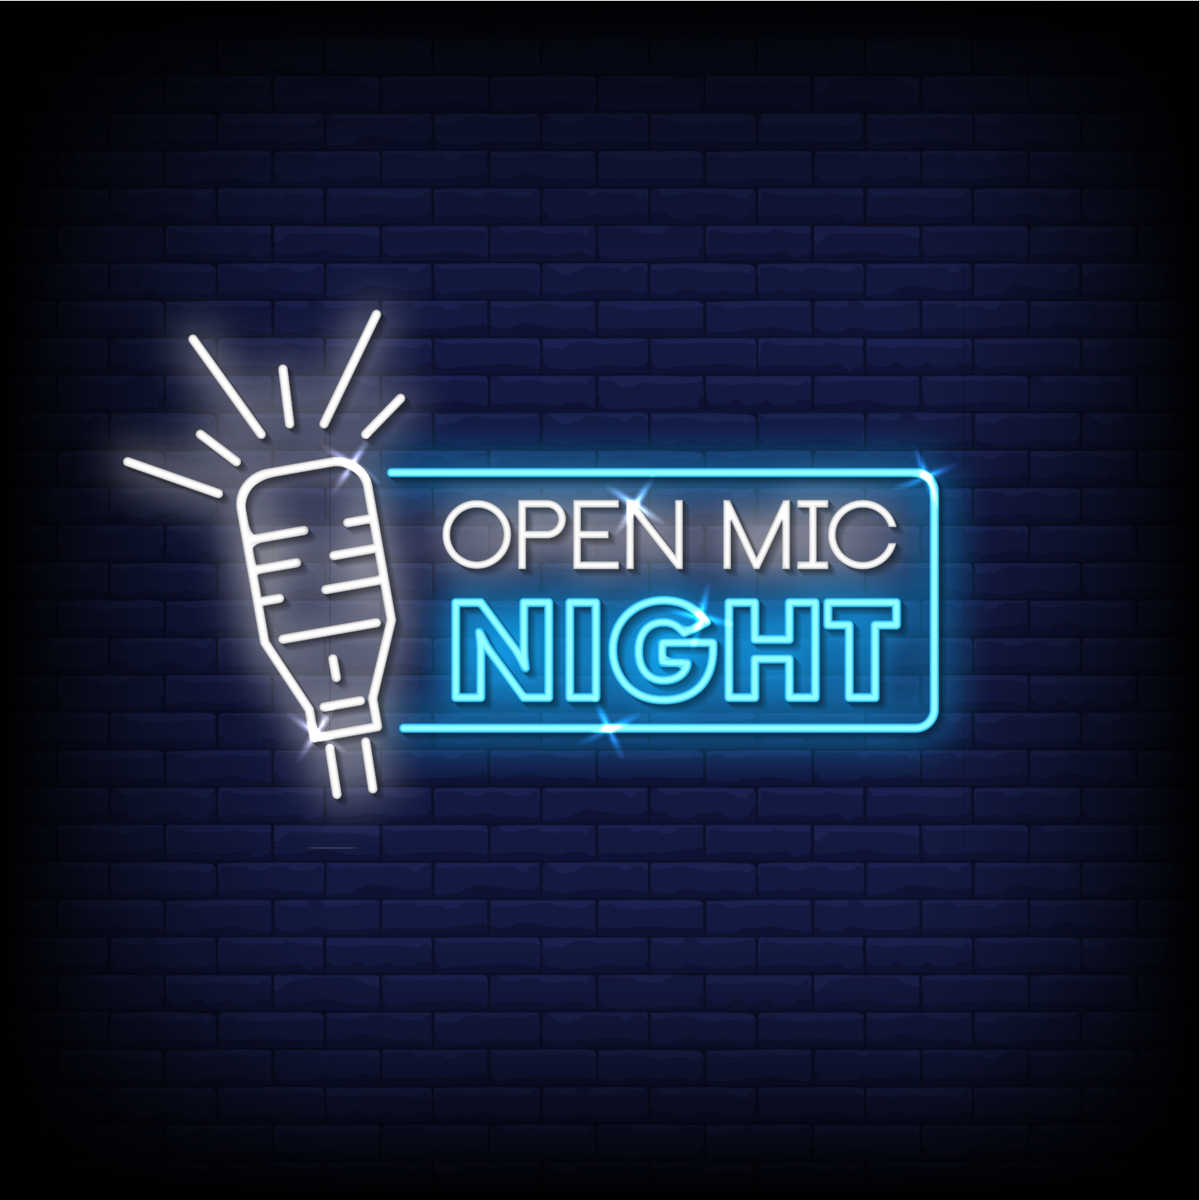 Open Mic Night sign